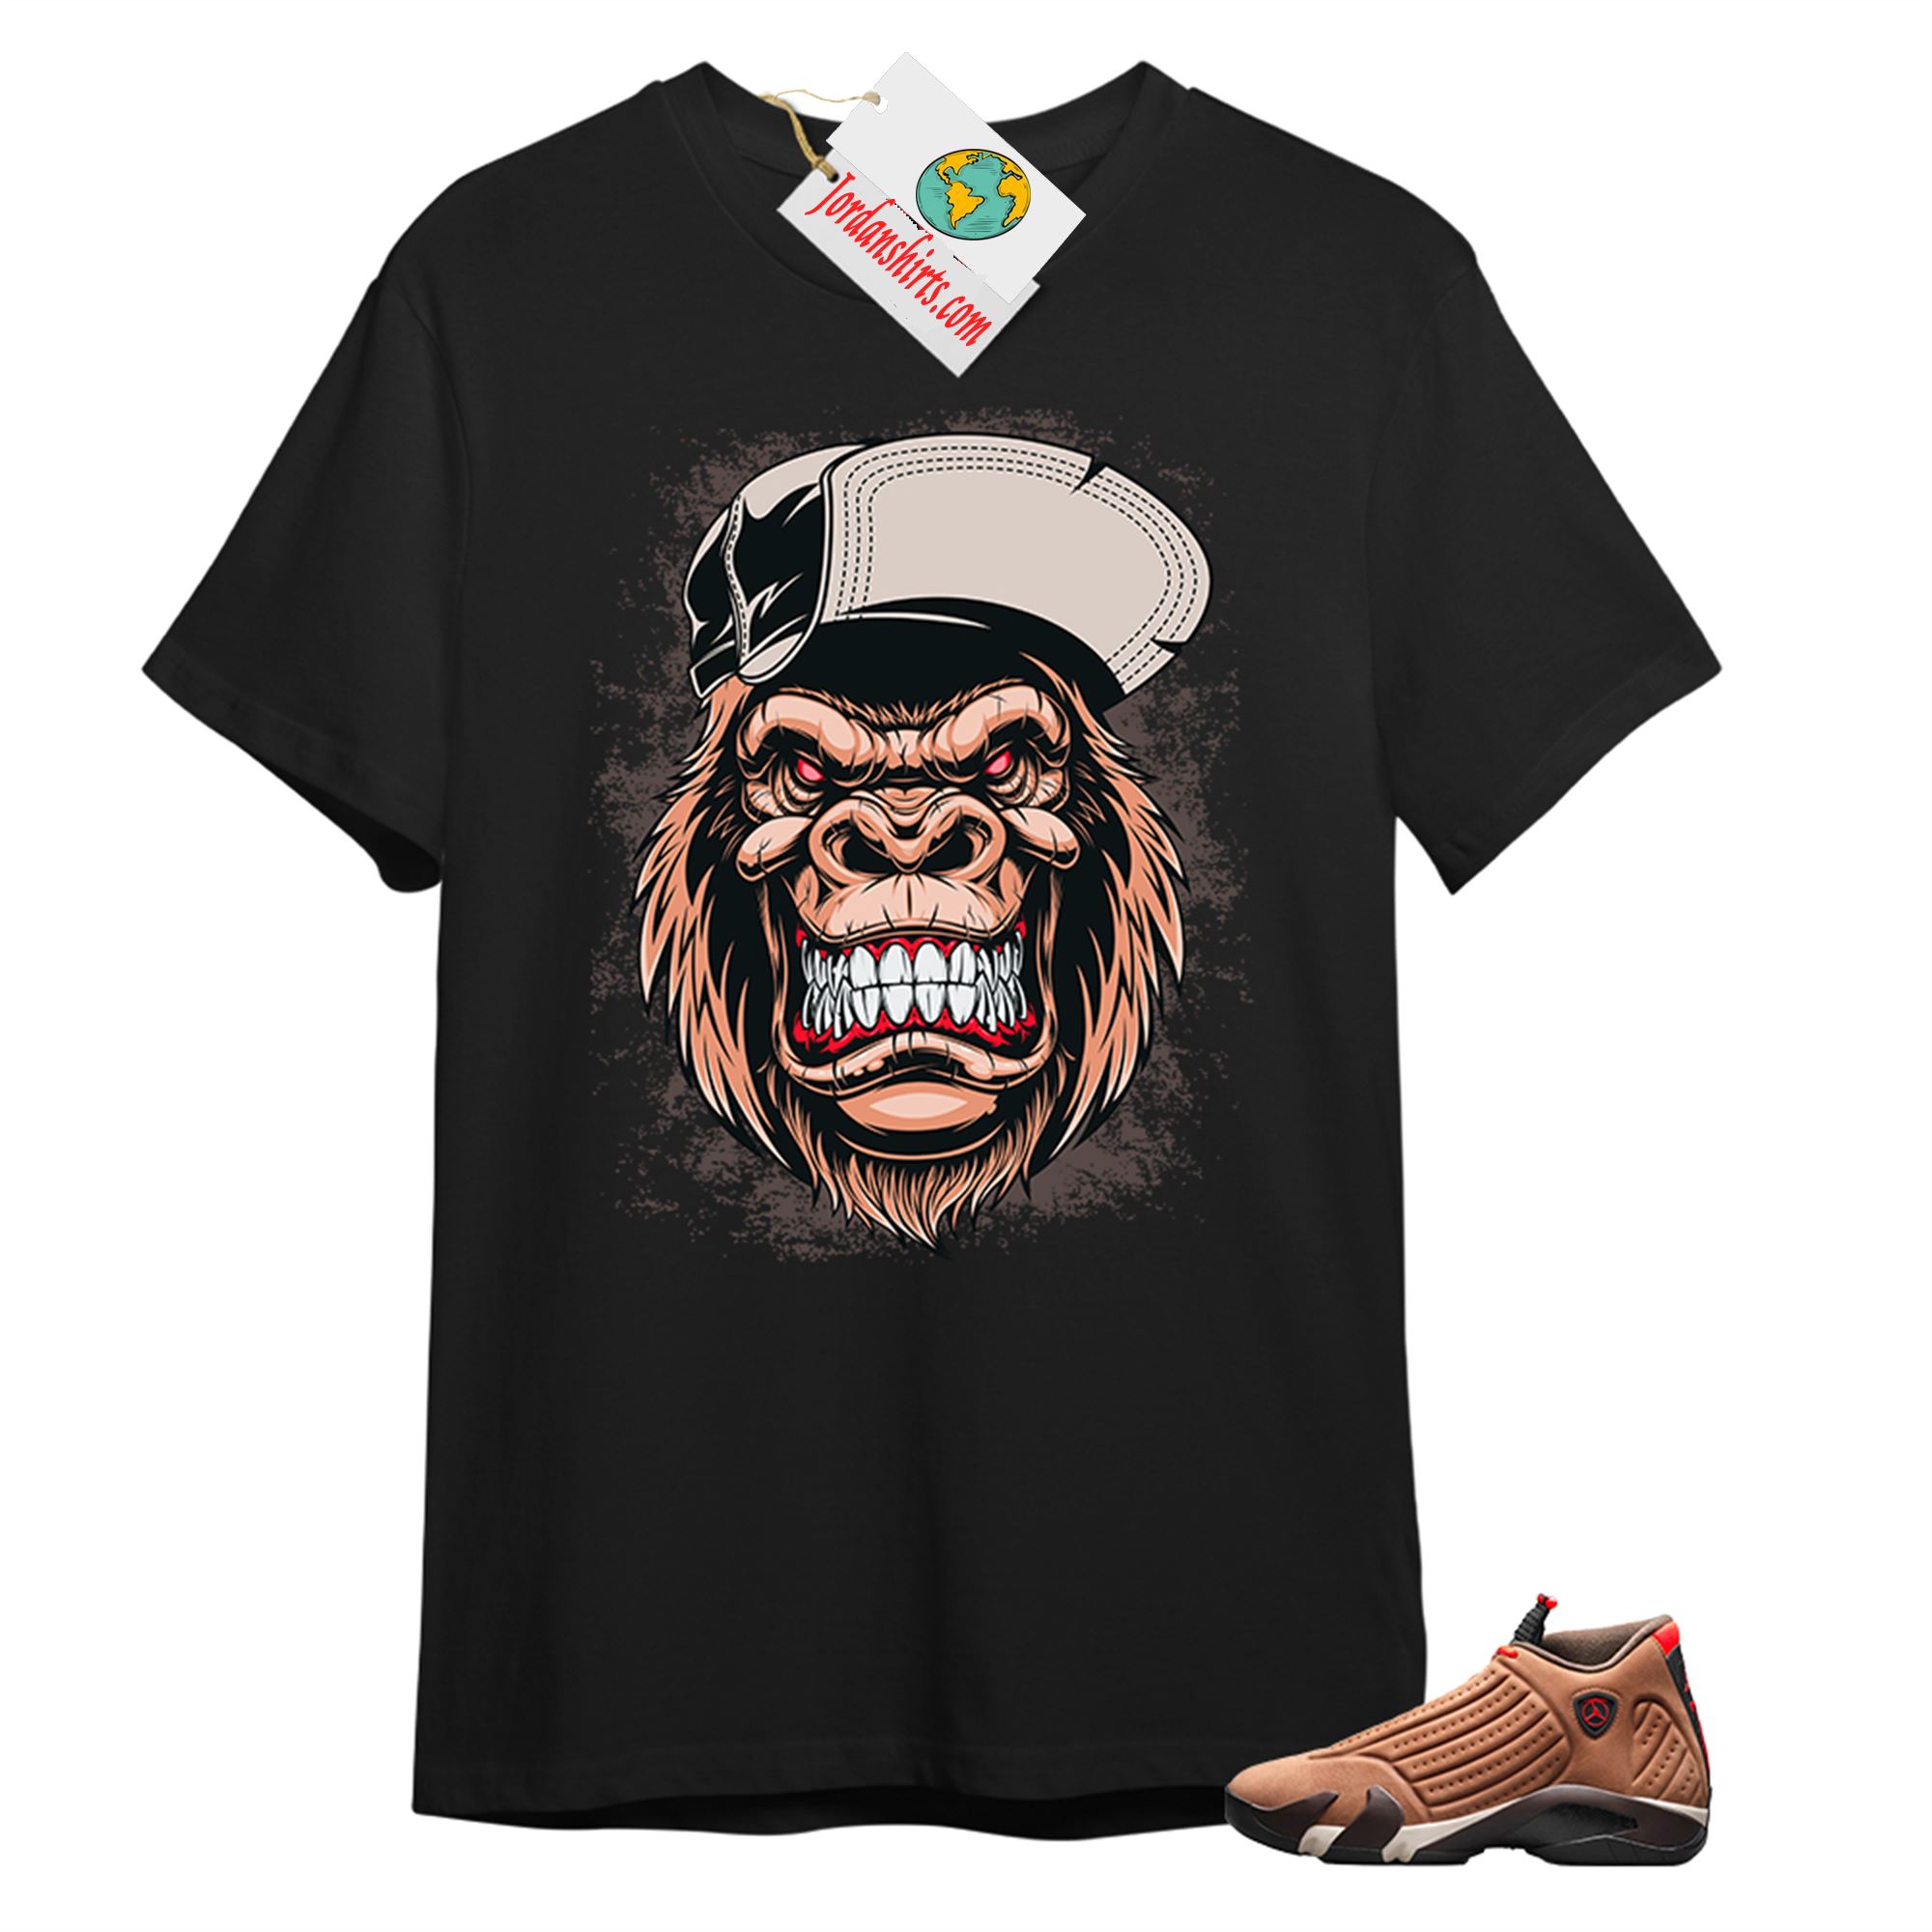 Jordan 14 Shirt, Ferocious Gorilla Black T-shirt Air Jordan 14 Winterized 14s Size Up To 5xl